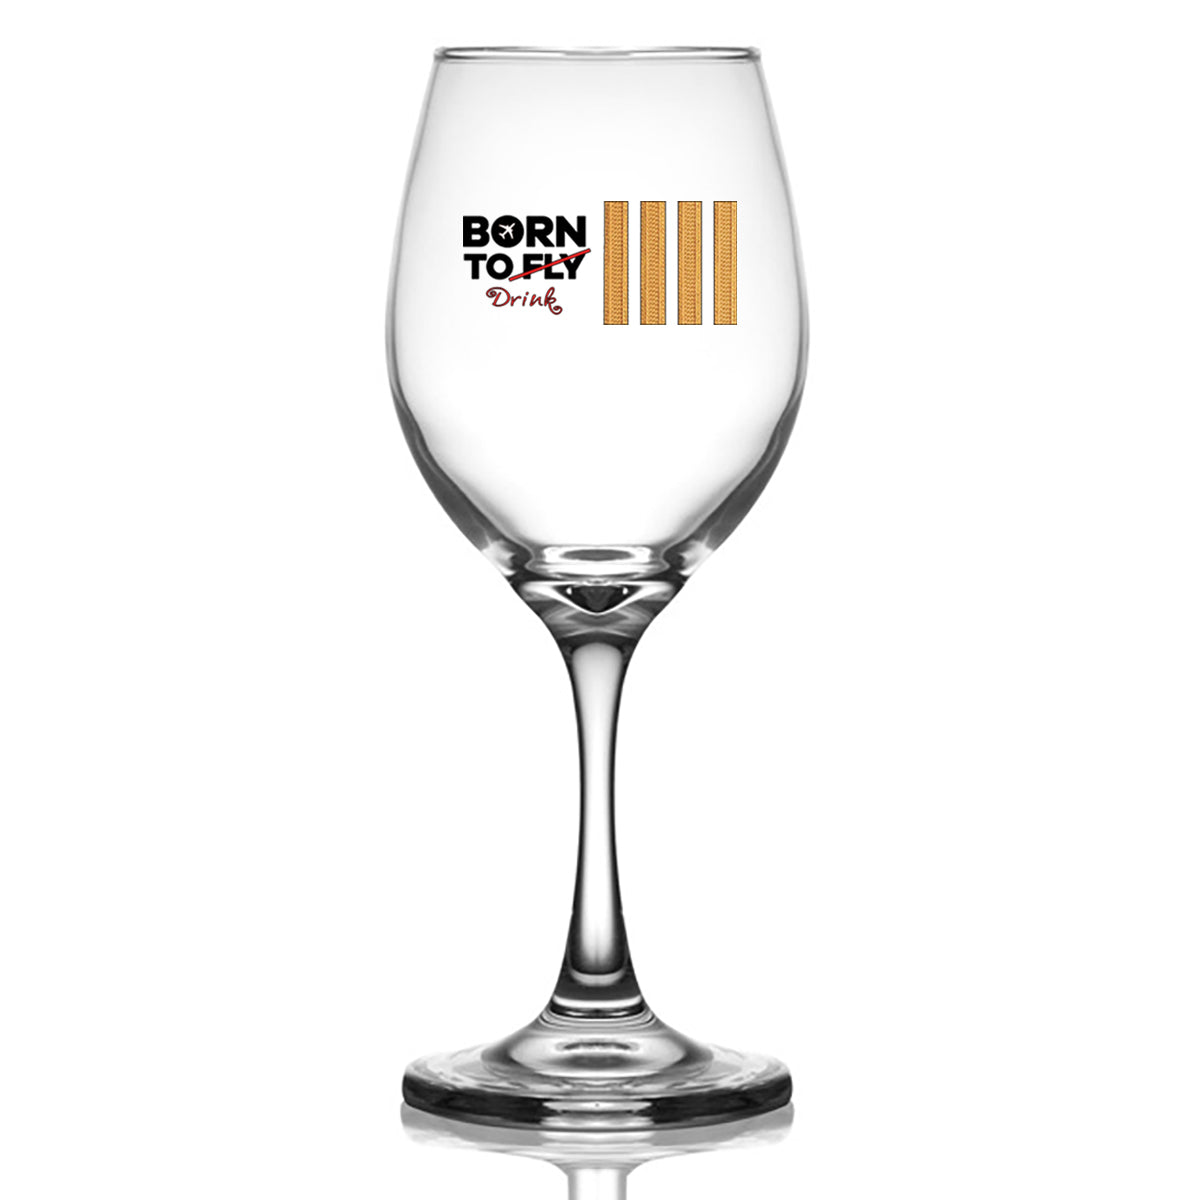 Born To Drink & 4 Lines Designed Wine Glasses